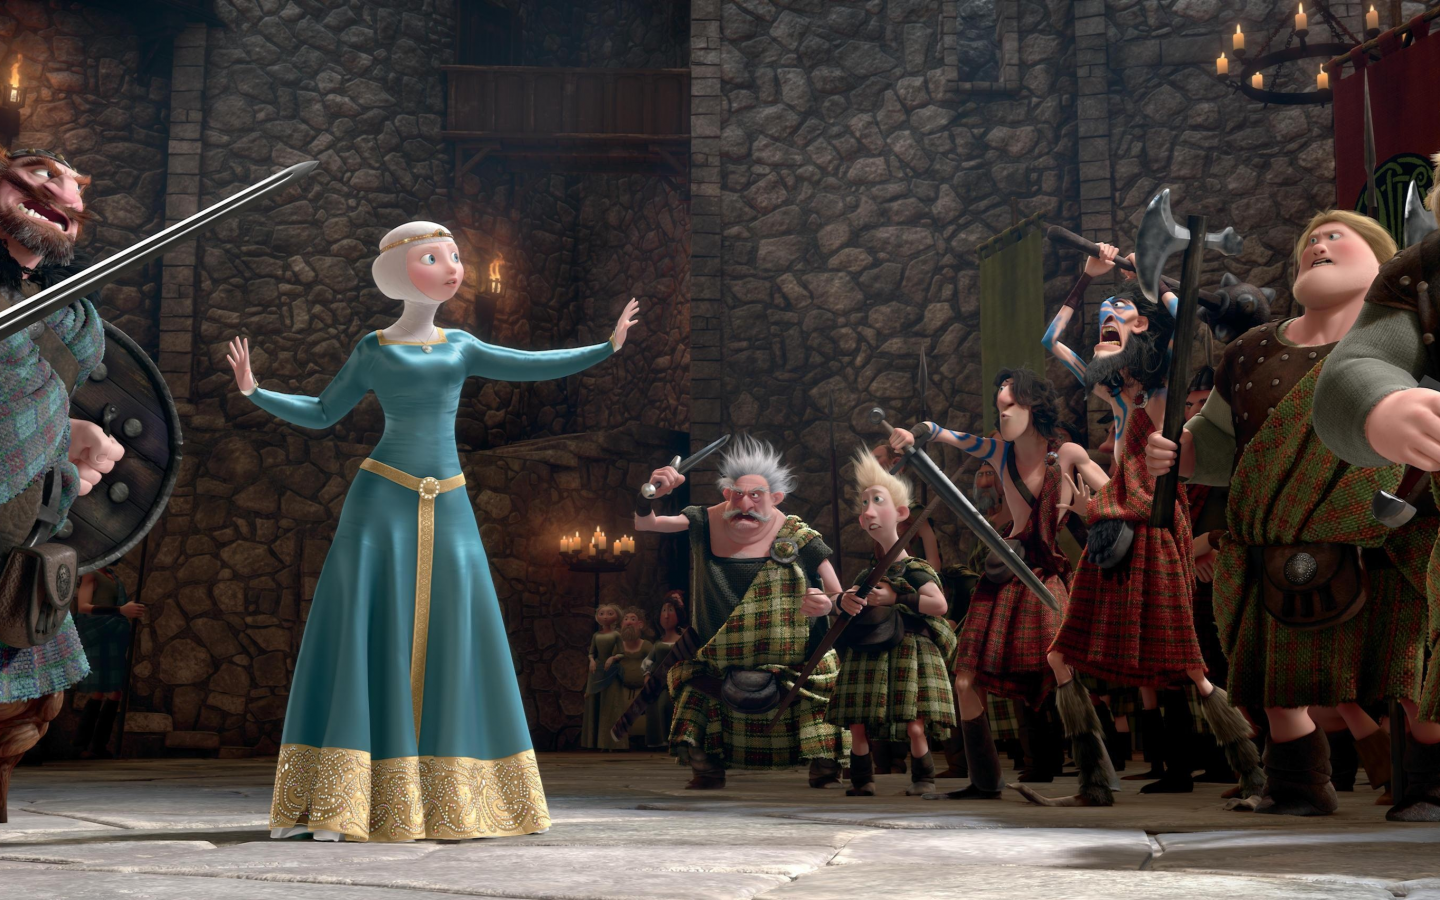 princess, film, queen, scotland, red hair, pixar, merida, Brave, the movie, disney, king, warriors